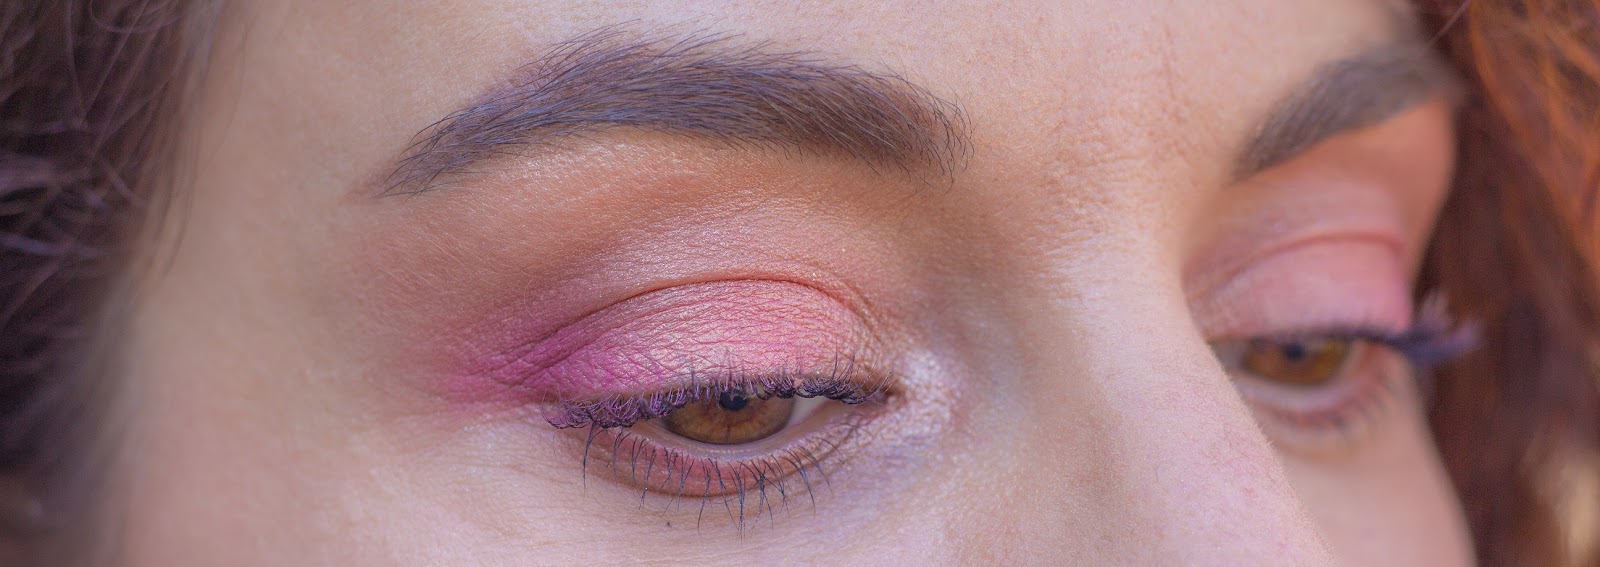 maquillage - estival - rose - corail